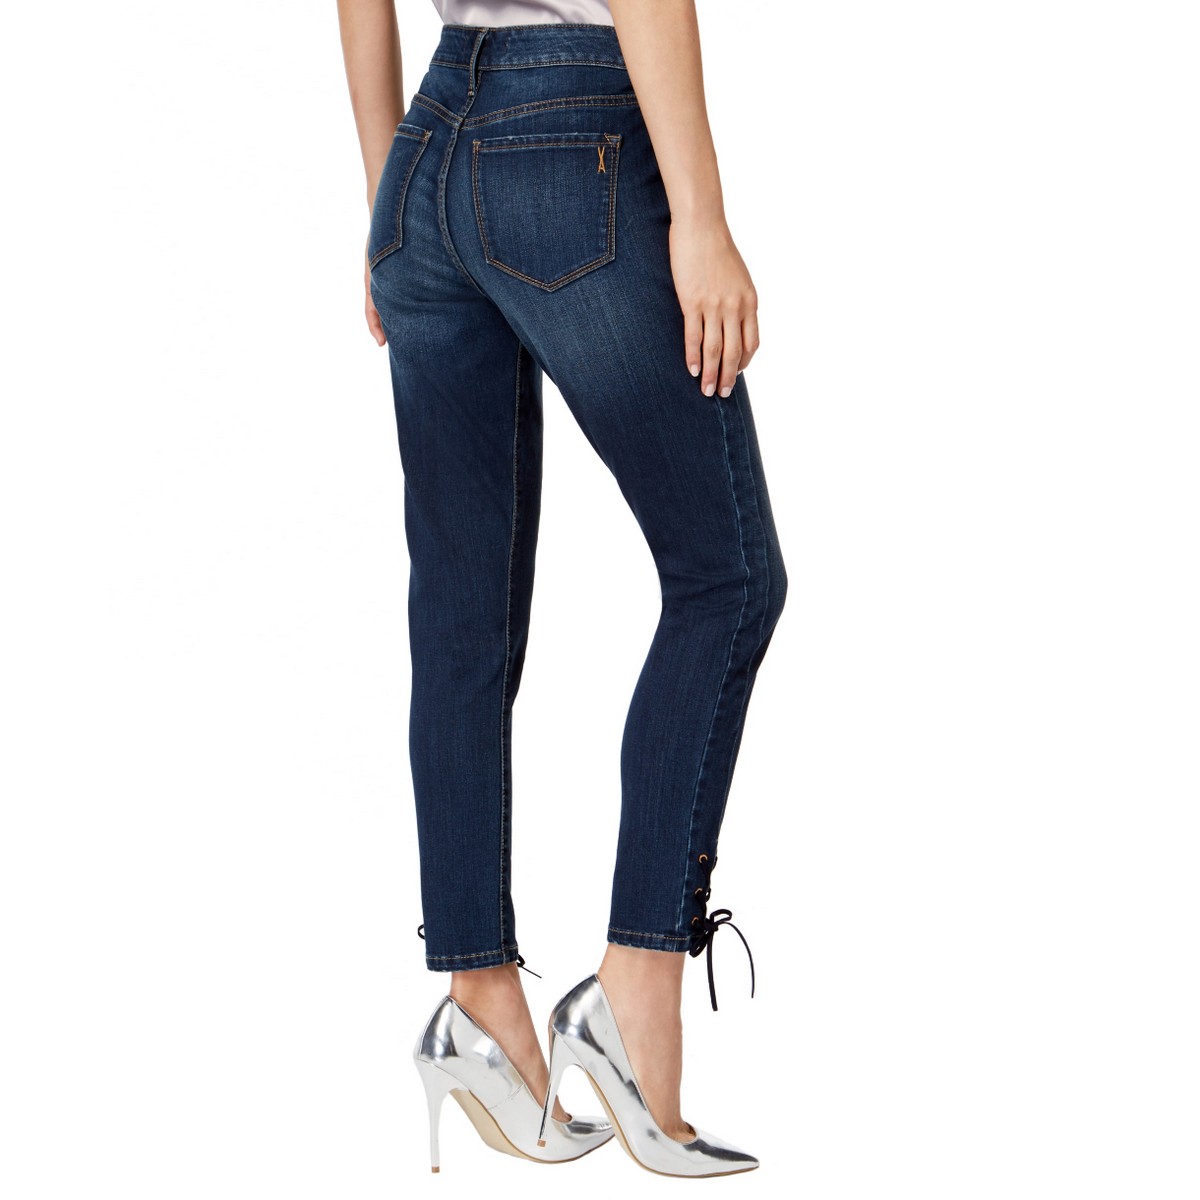 Skinny Jeans tedo VINTAGE AMERICA NEW WOMEN'S HIGH-RISE SLIM 